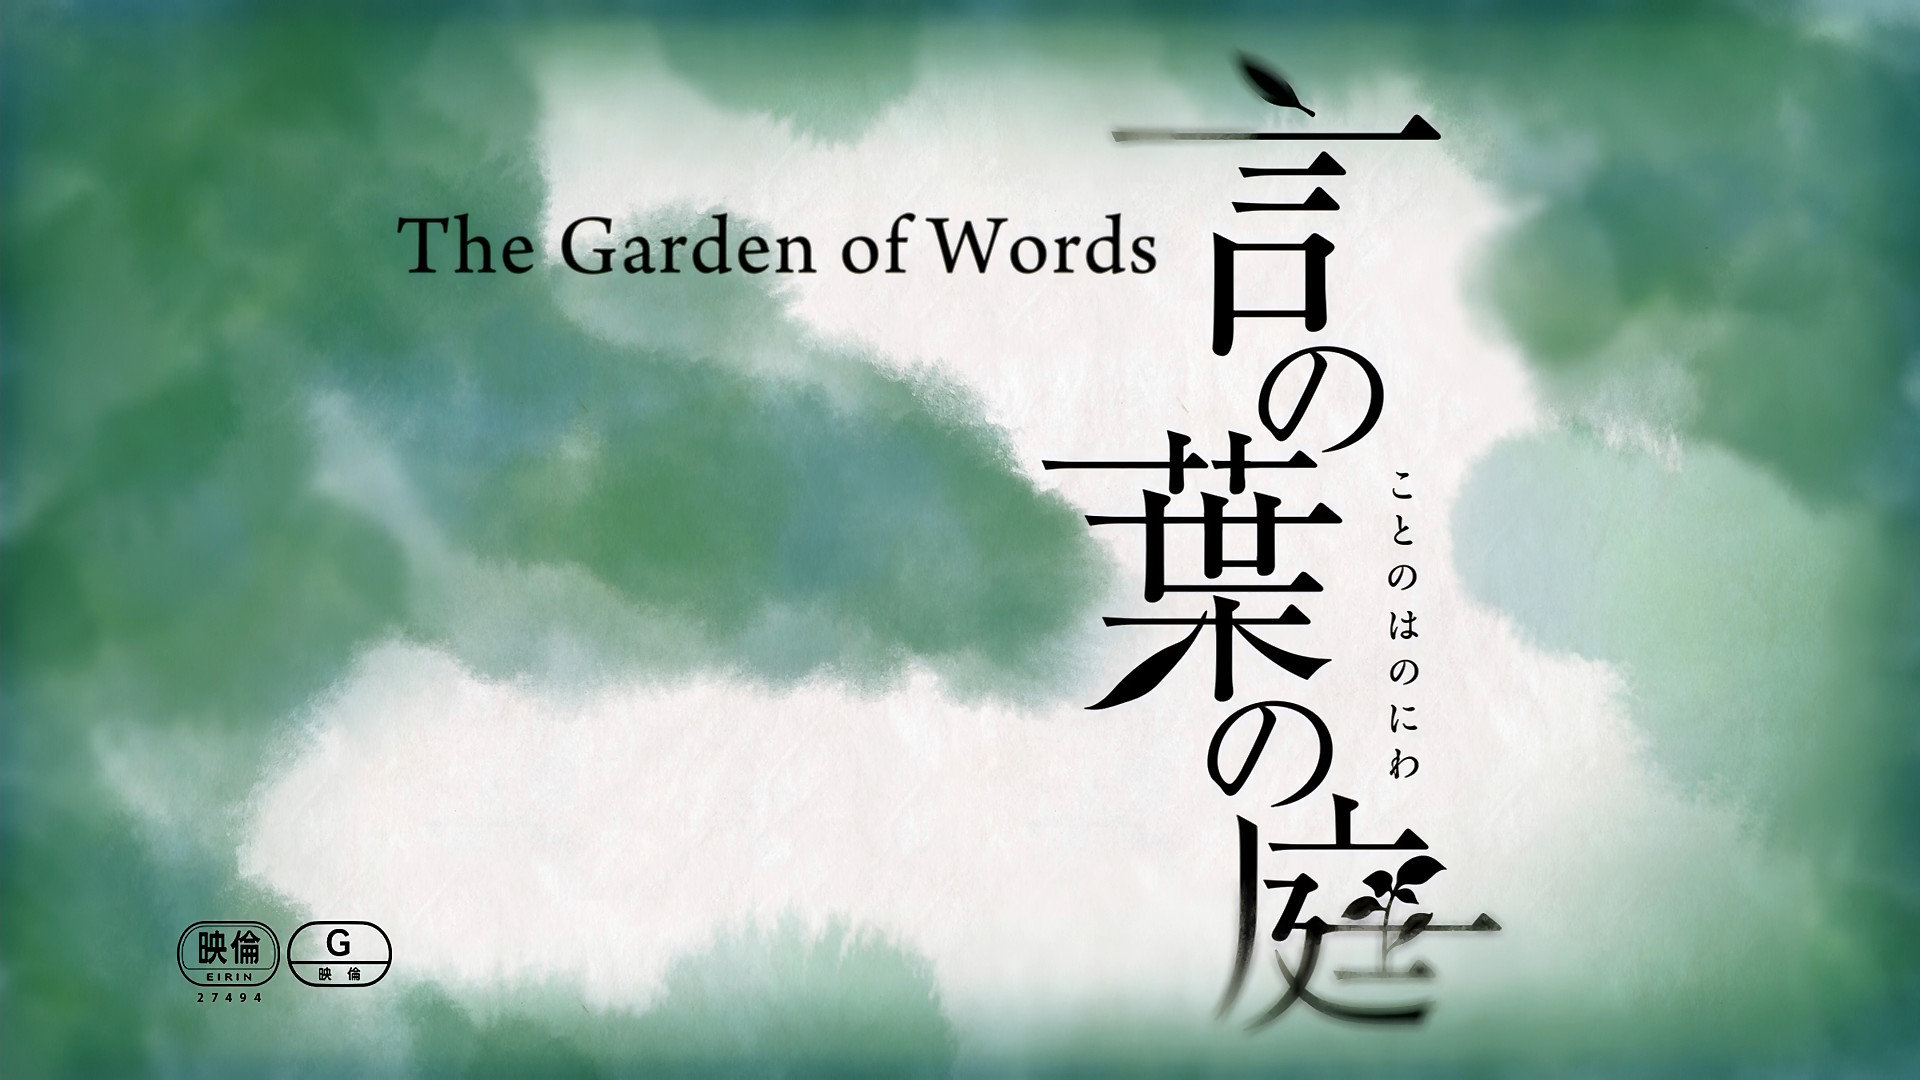 Free download The Garden Of Words wallpaper ID:26069 full hd 1080p for desktop